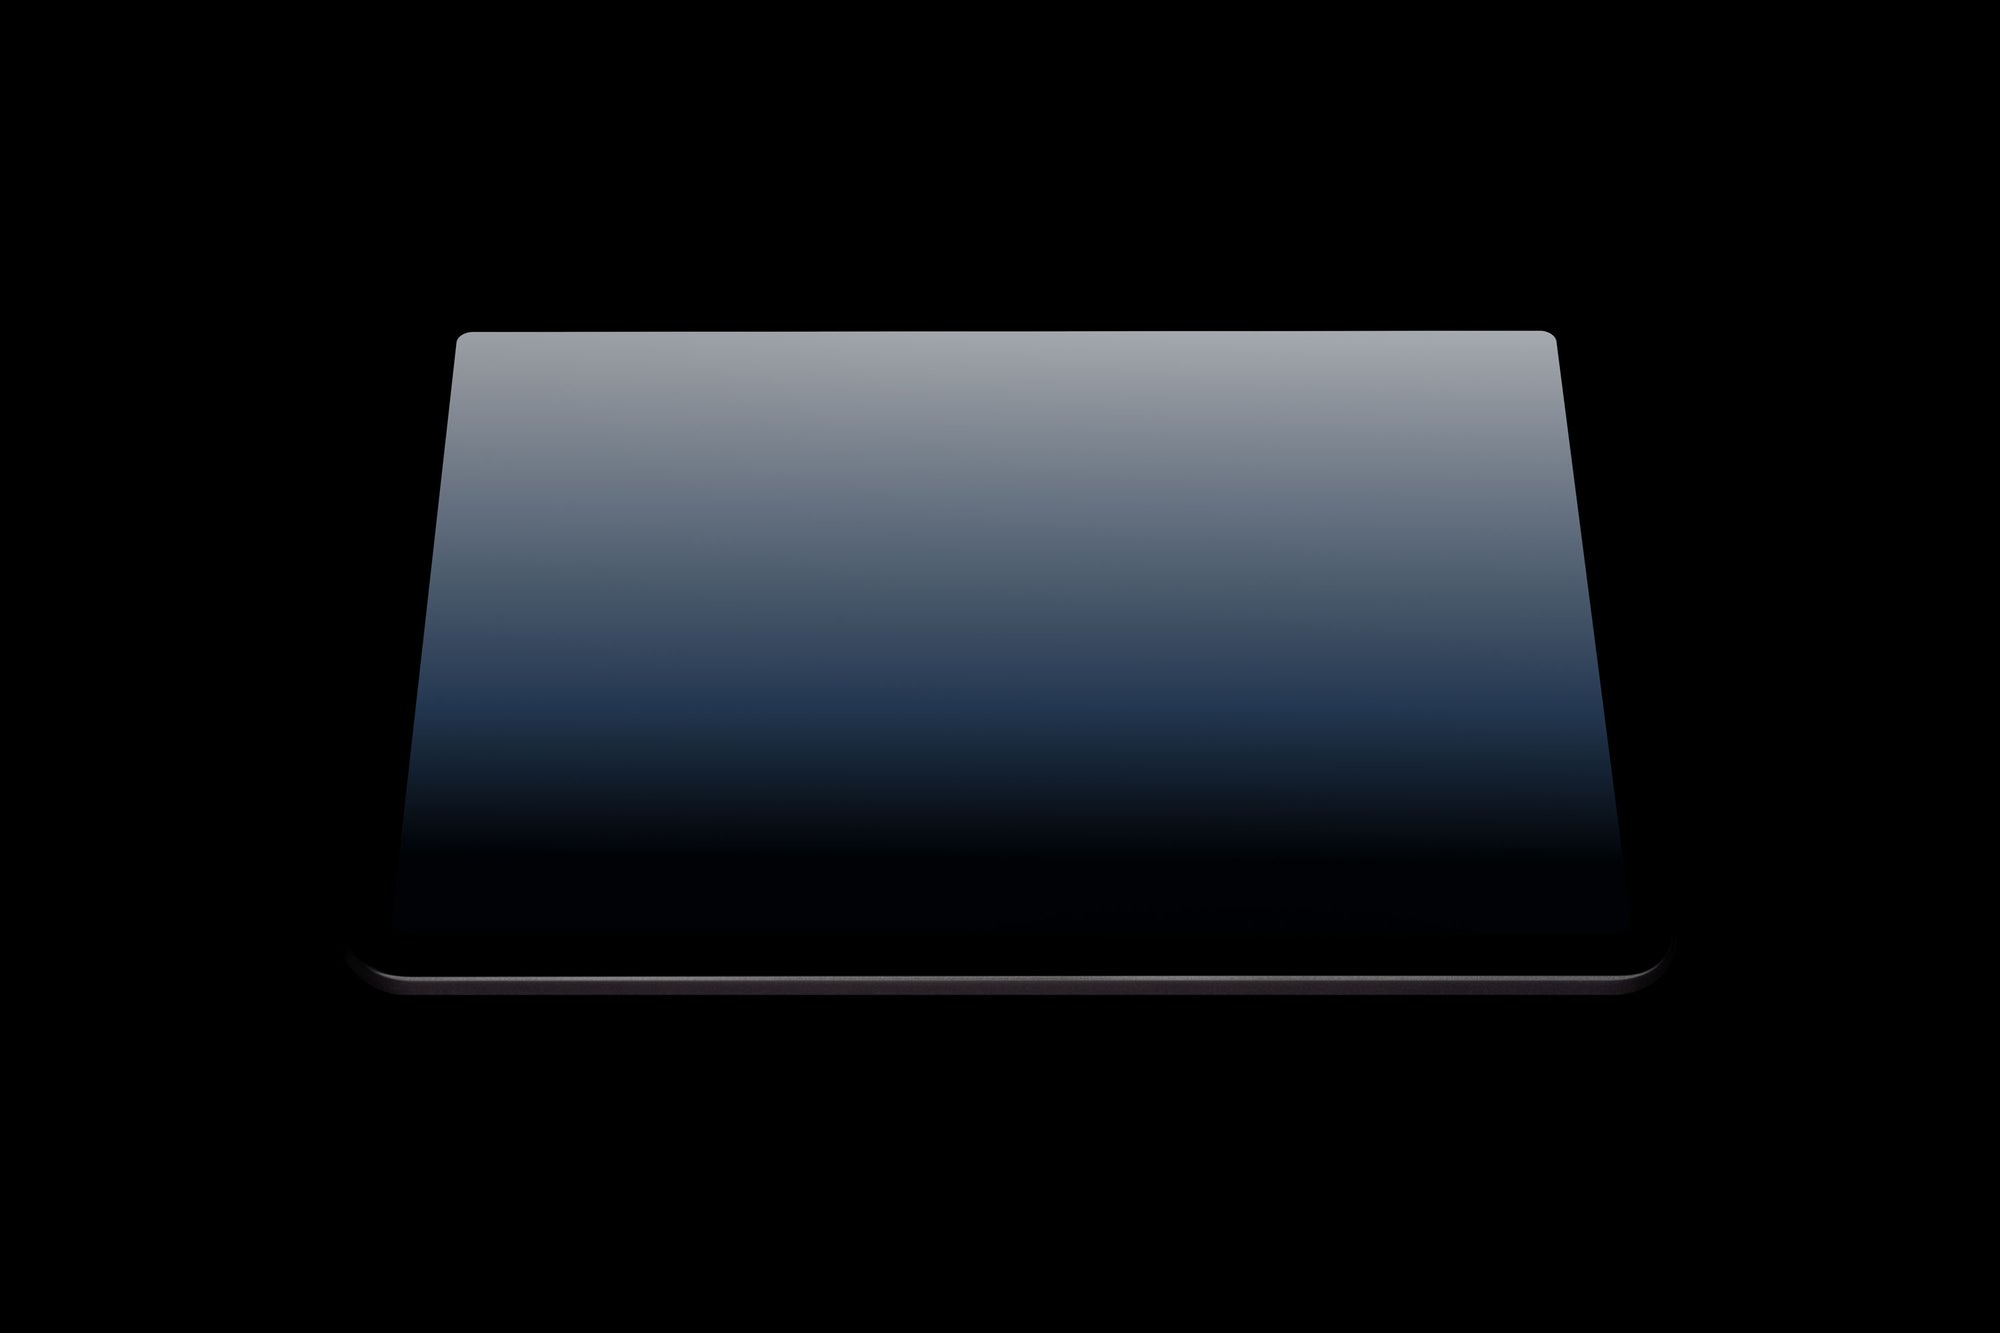 NR09 — iPad Pro